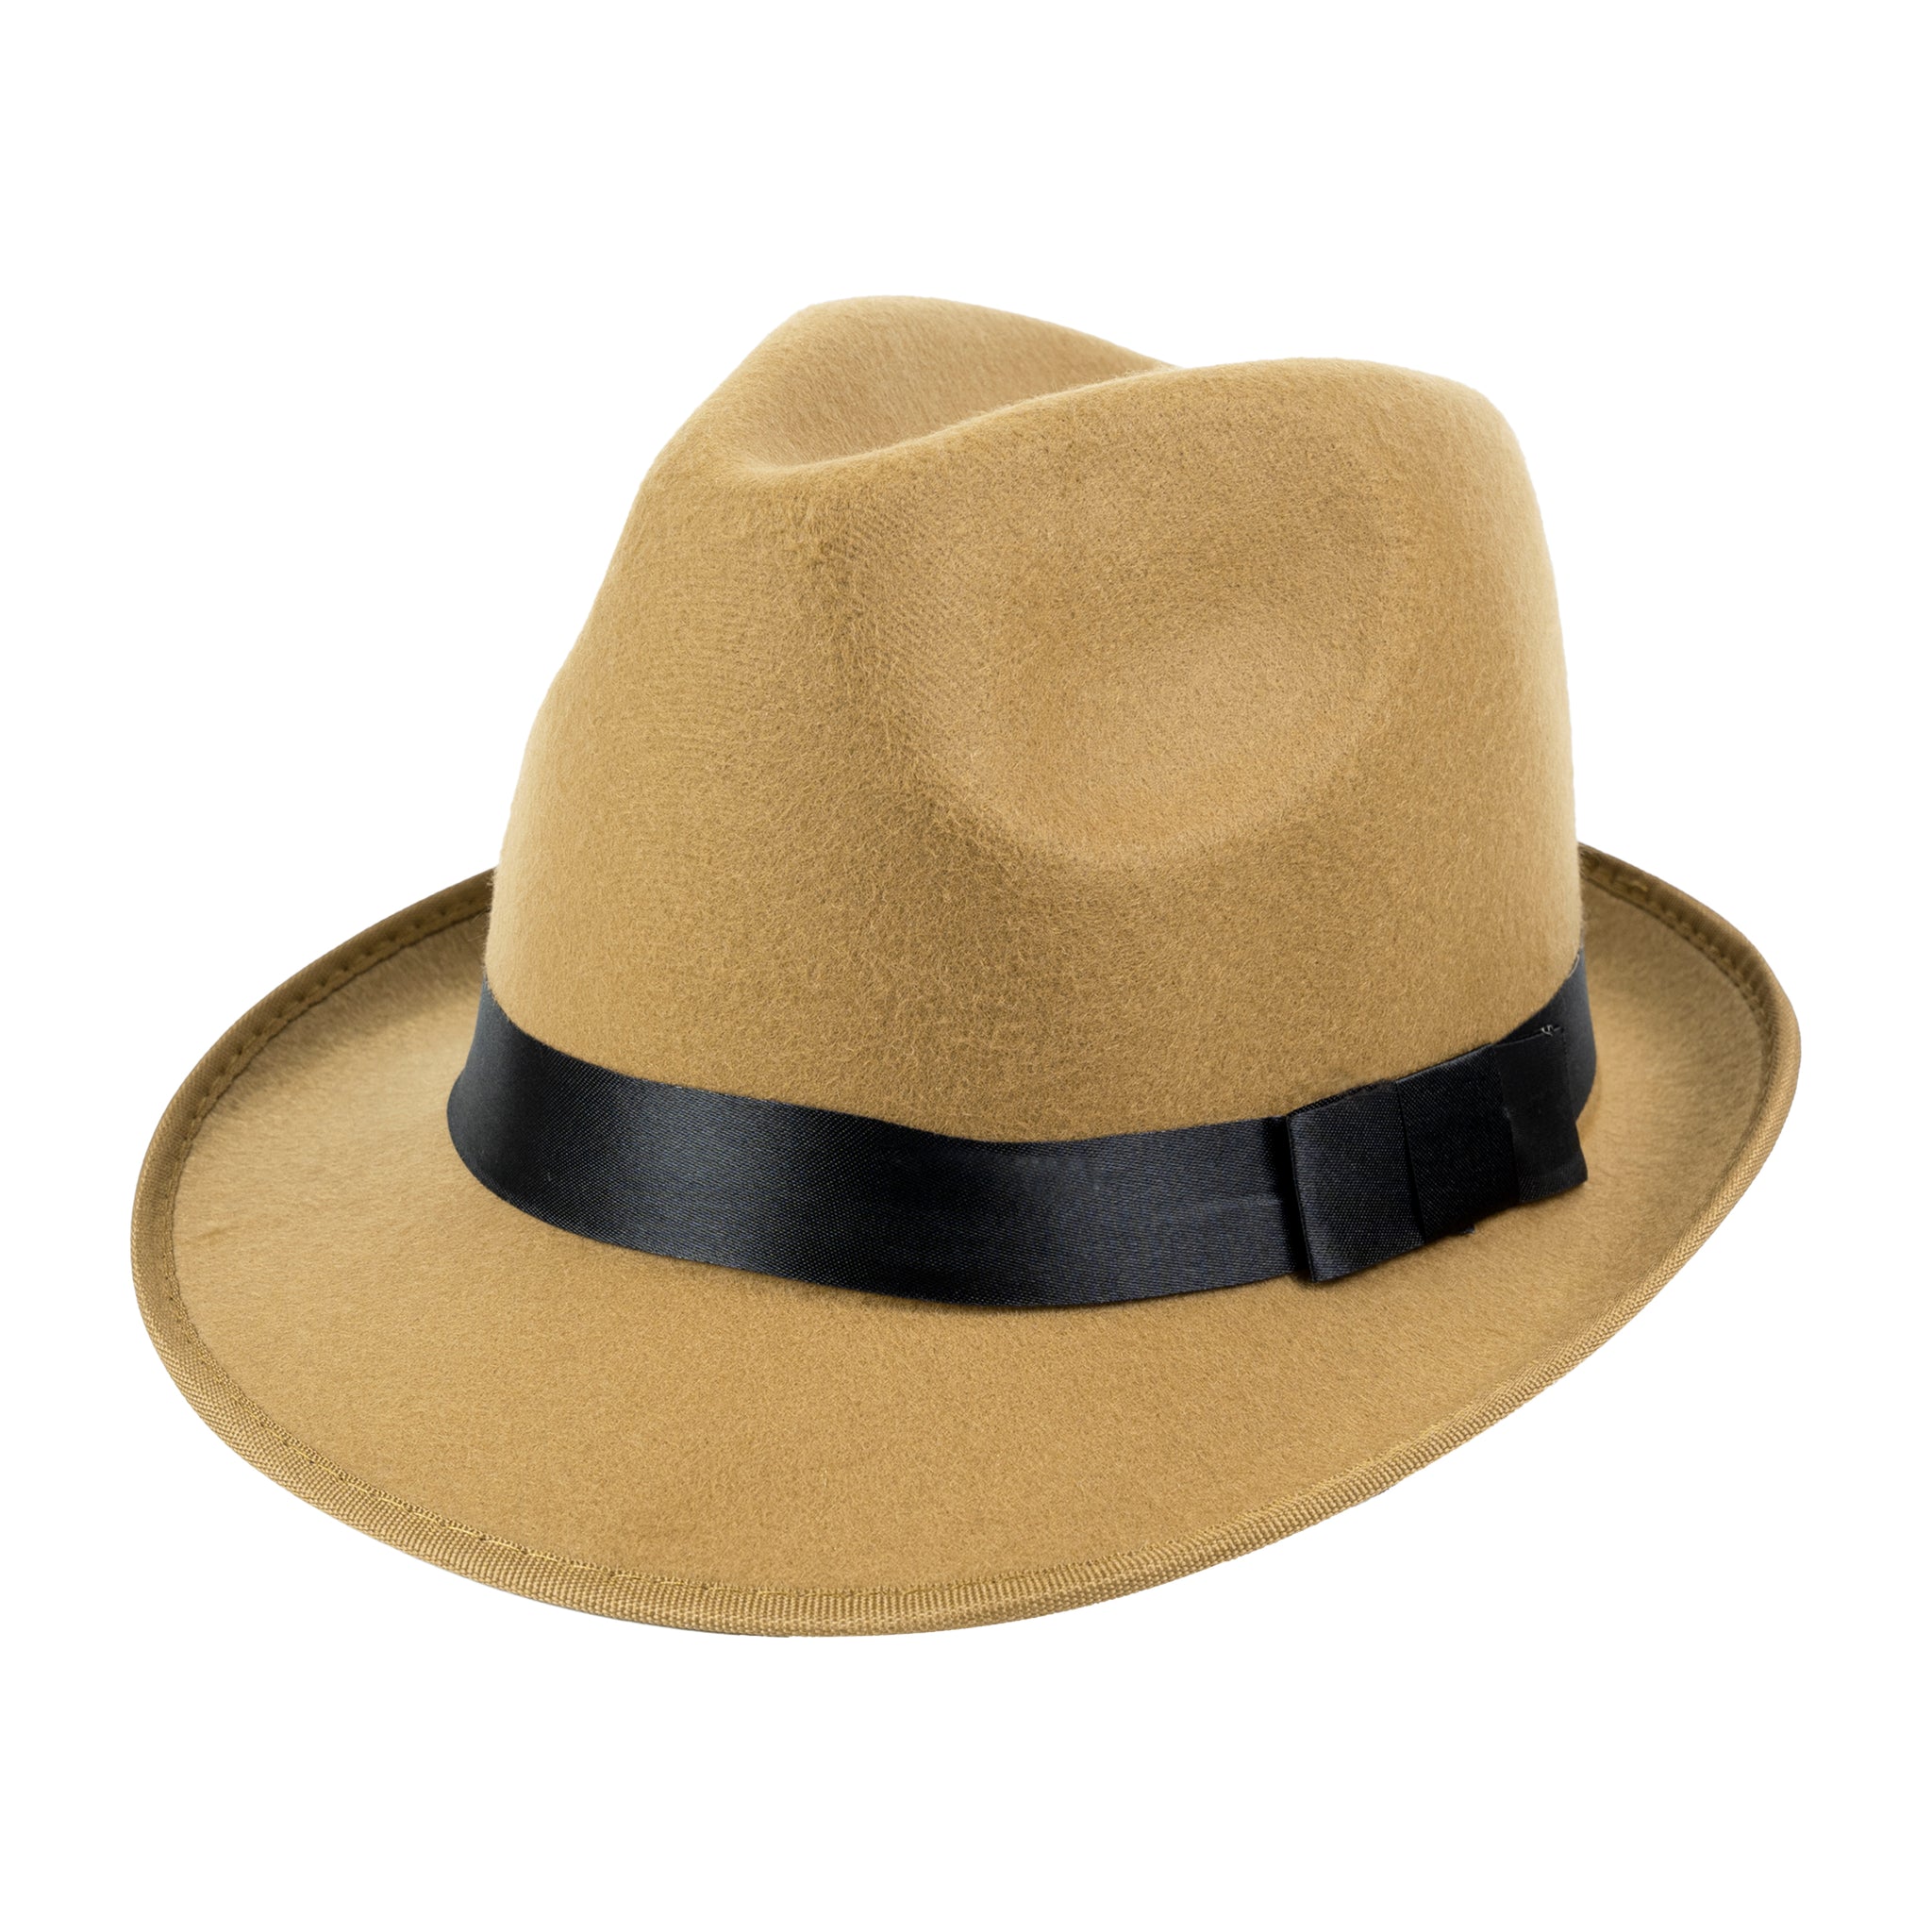 Chokore Vintage Fedora Hat with Short Brim (Camel)